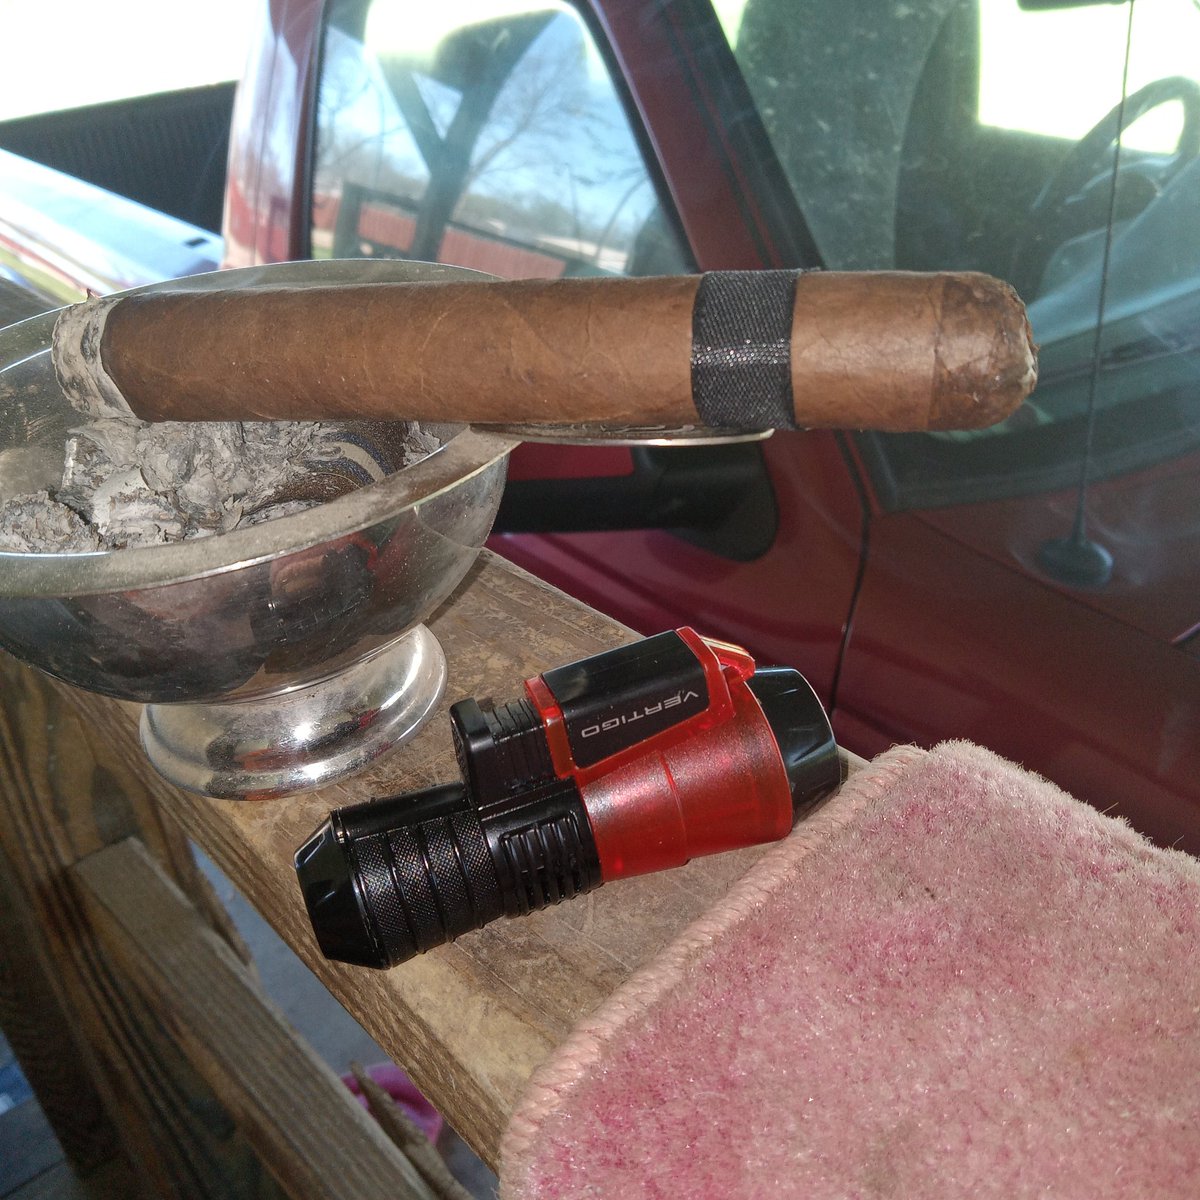 Rocky Patel Number 6 Fumas Toro. #cigars #vertigosputnik @RockyPatelCigar
Cut with a Shuriken cutter